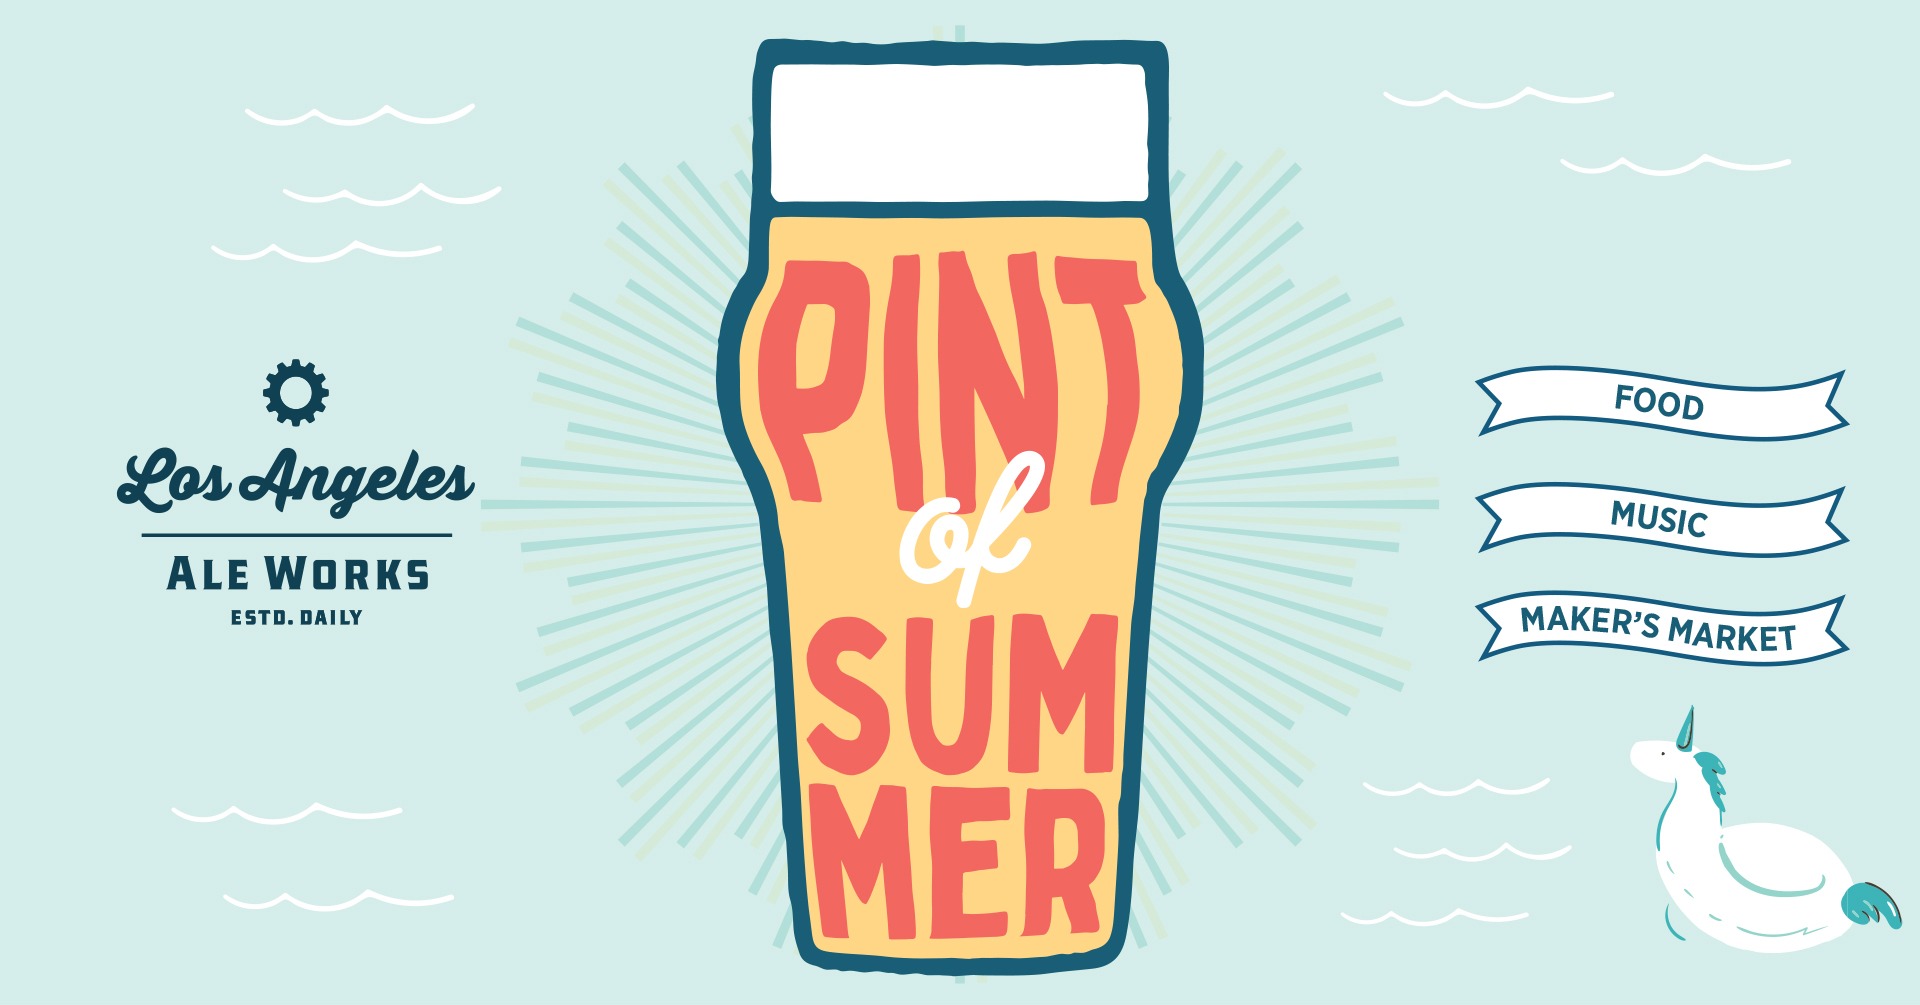 Pint of Summer Saturday, July 24